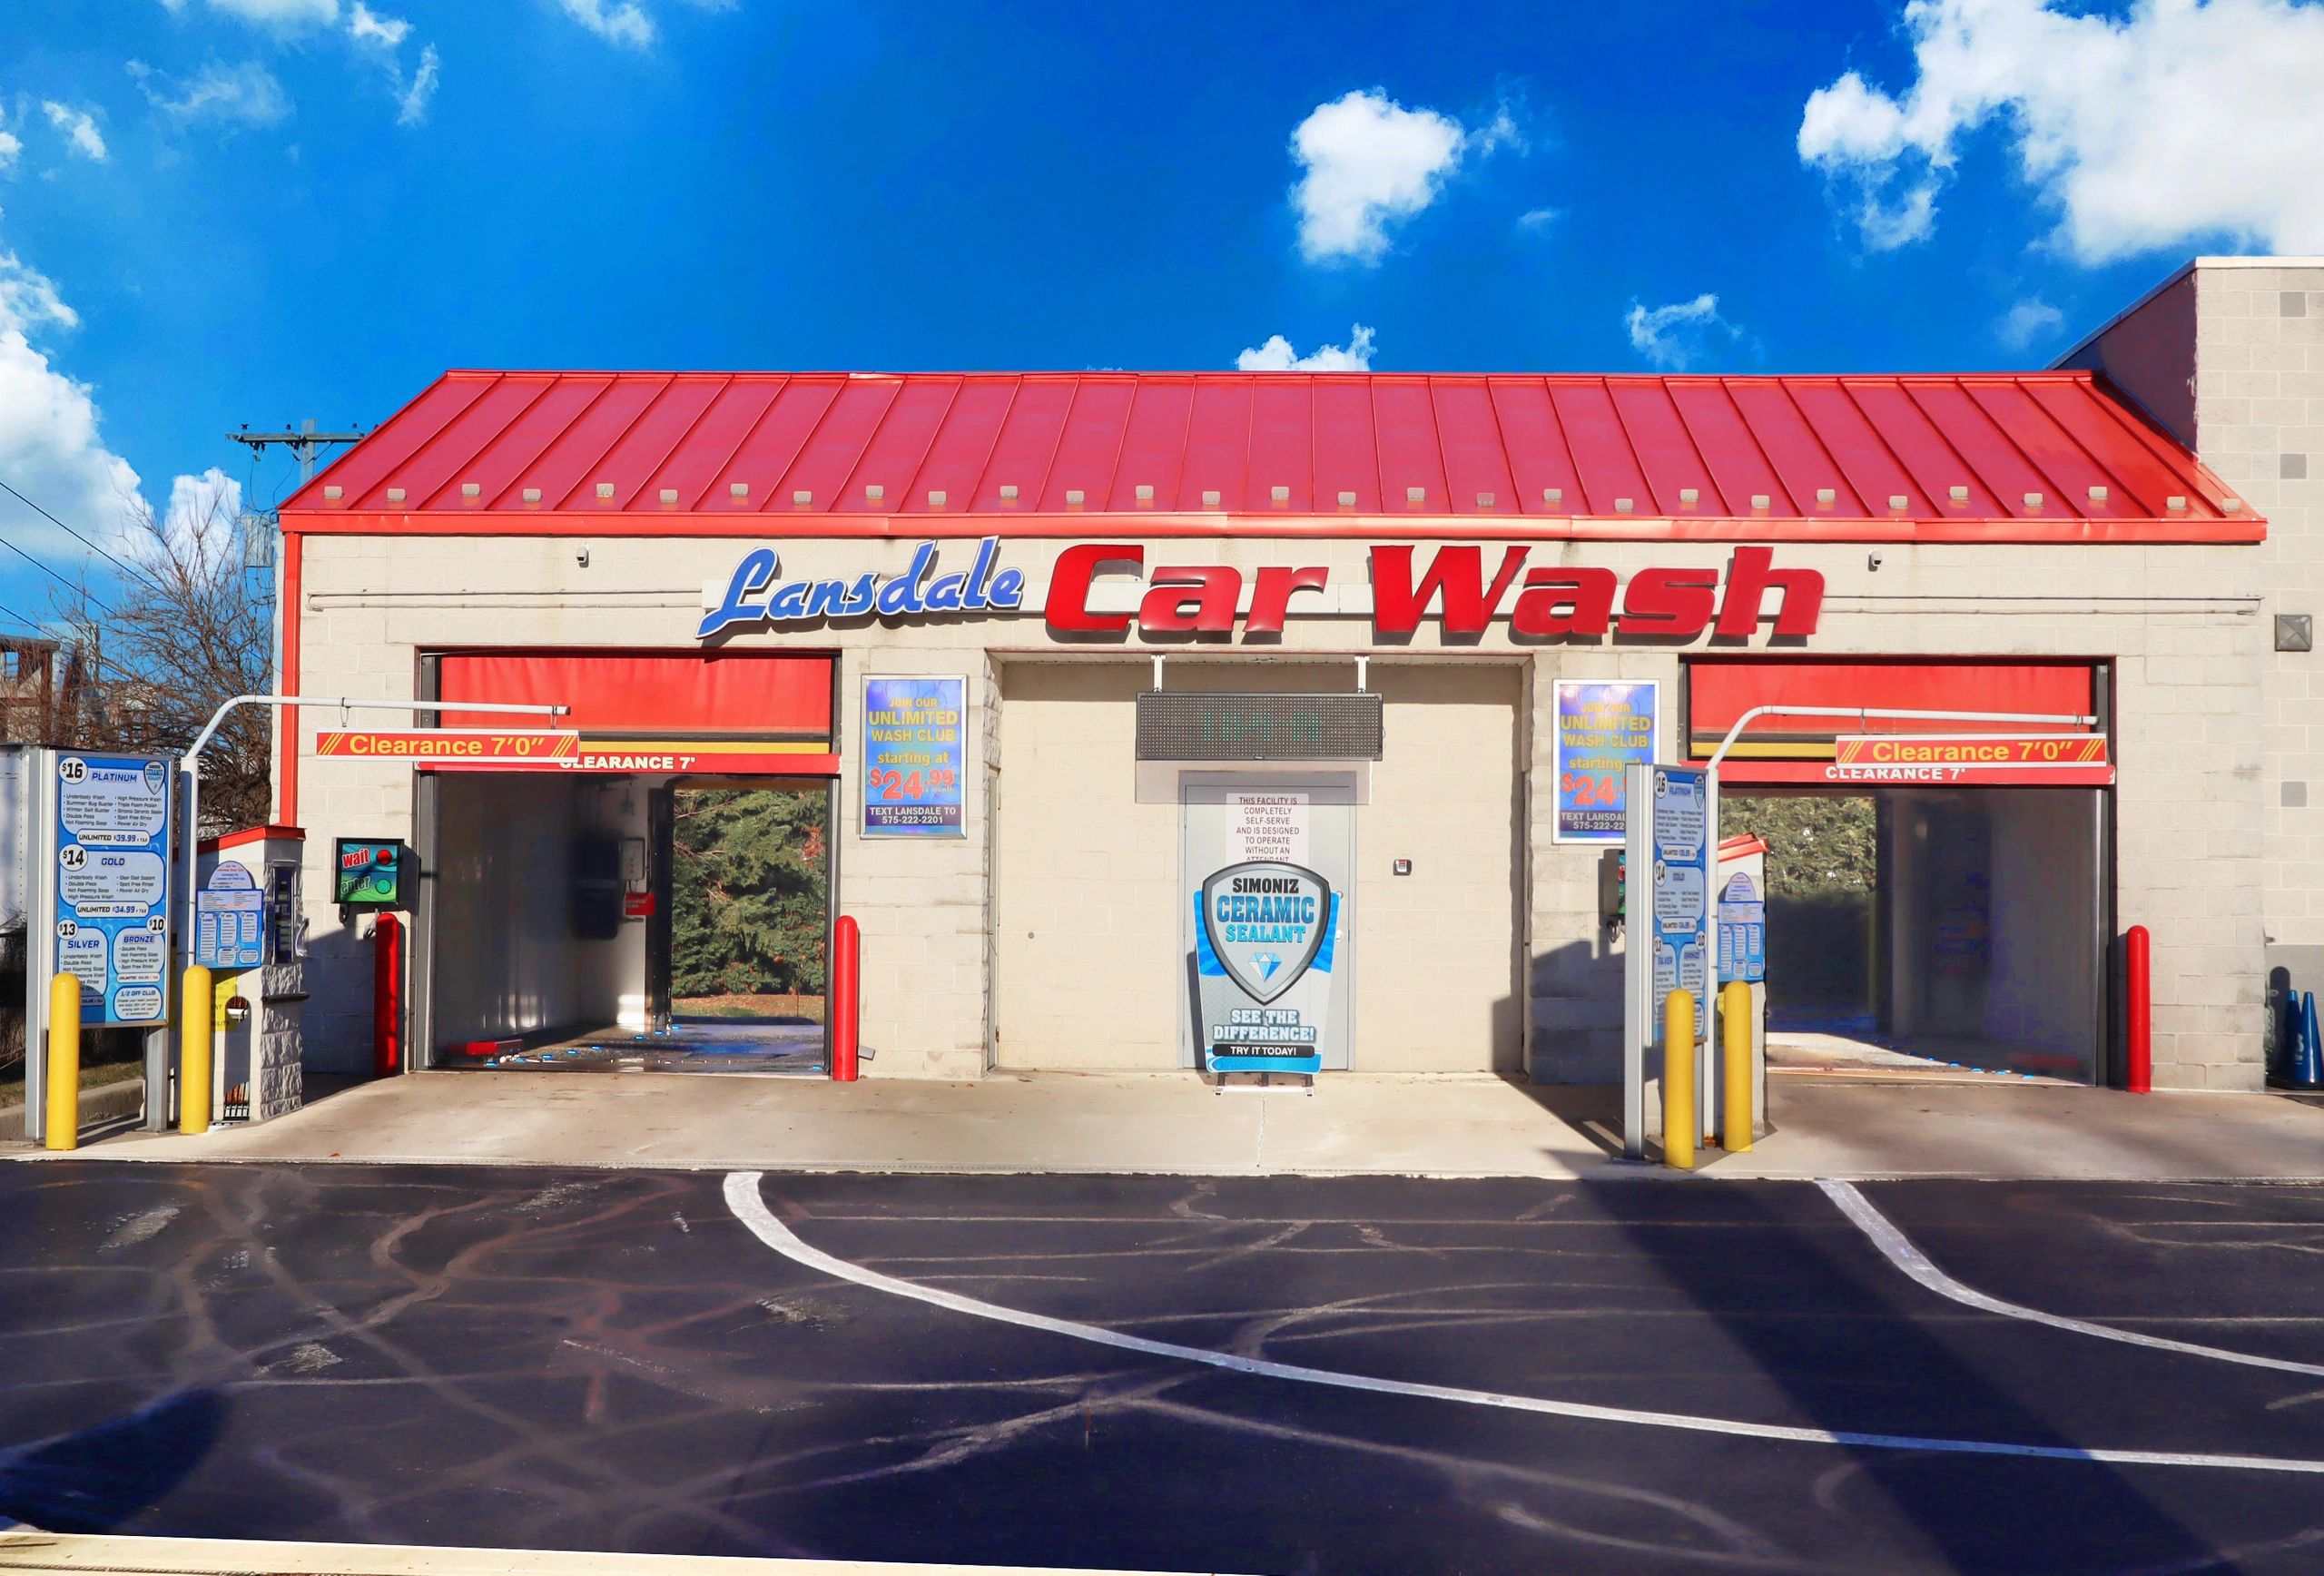 Lansdale Car Wash - Touchless Car Wash, Car Wash, Unlimited Car Wash